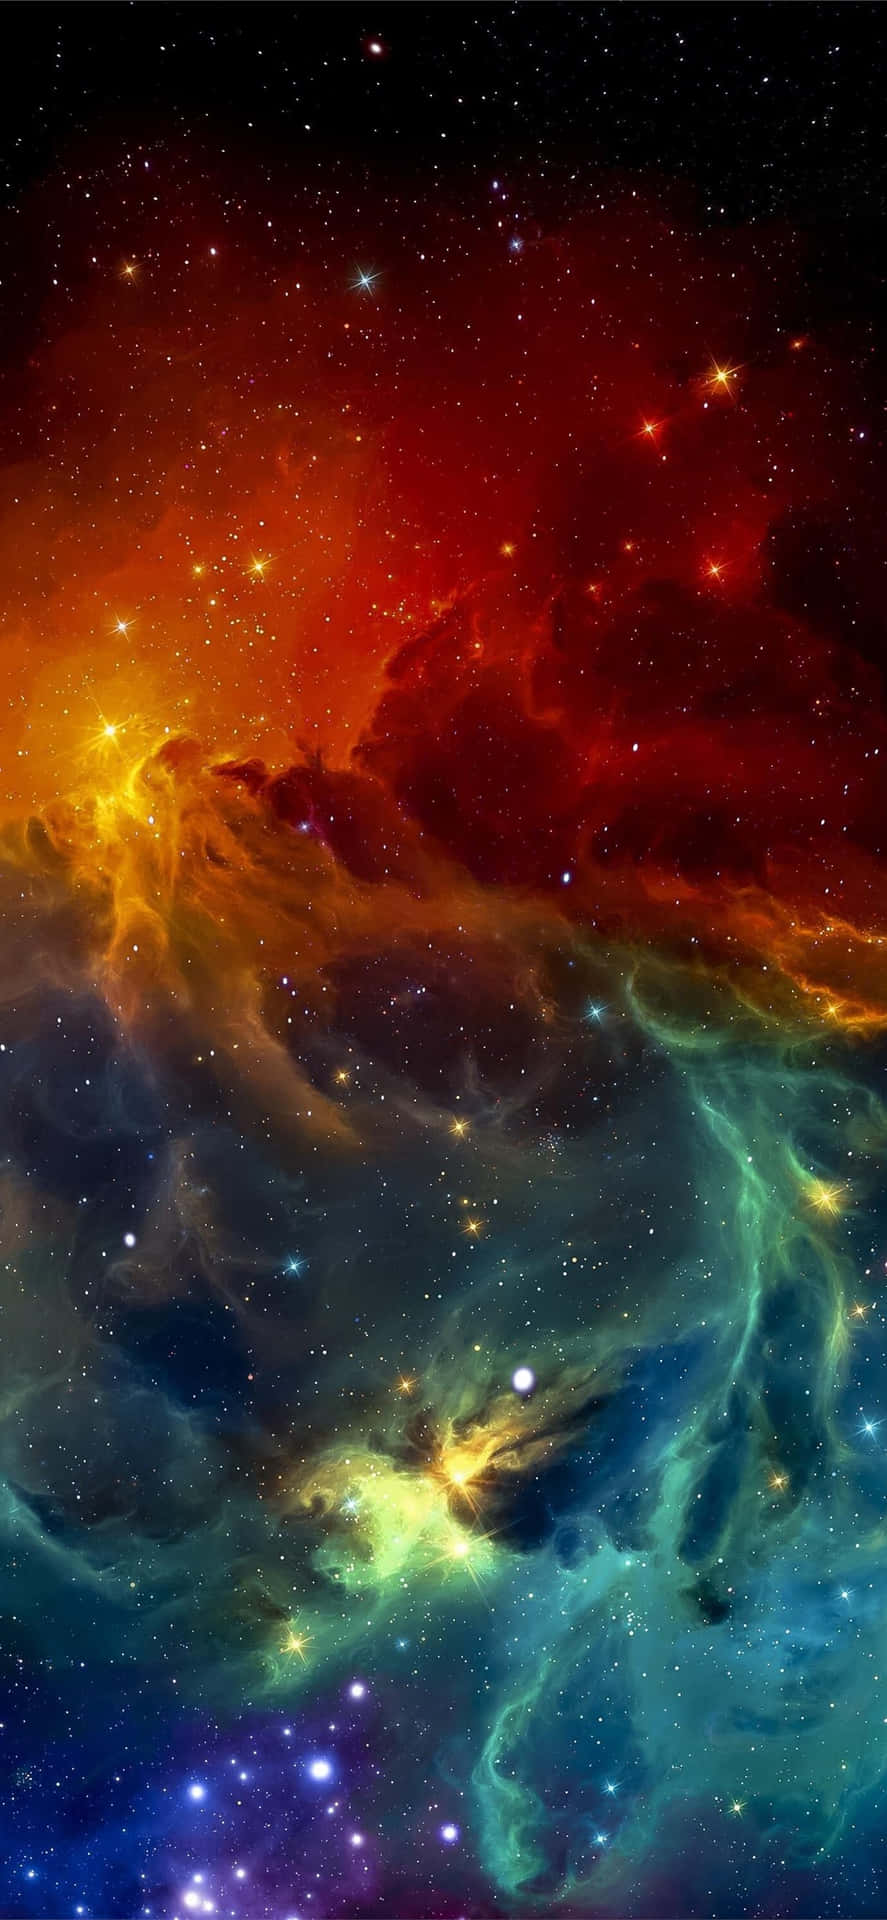 Stunning Deep Space Nebula Wallpaper